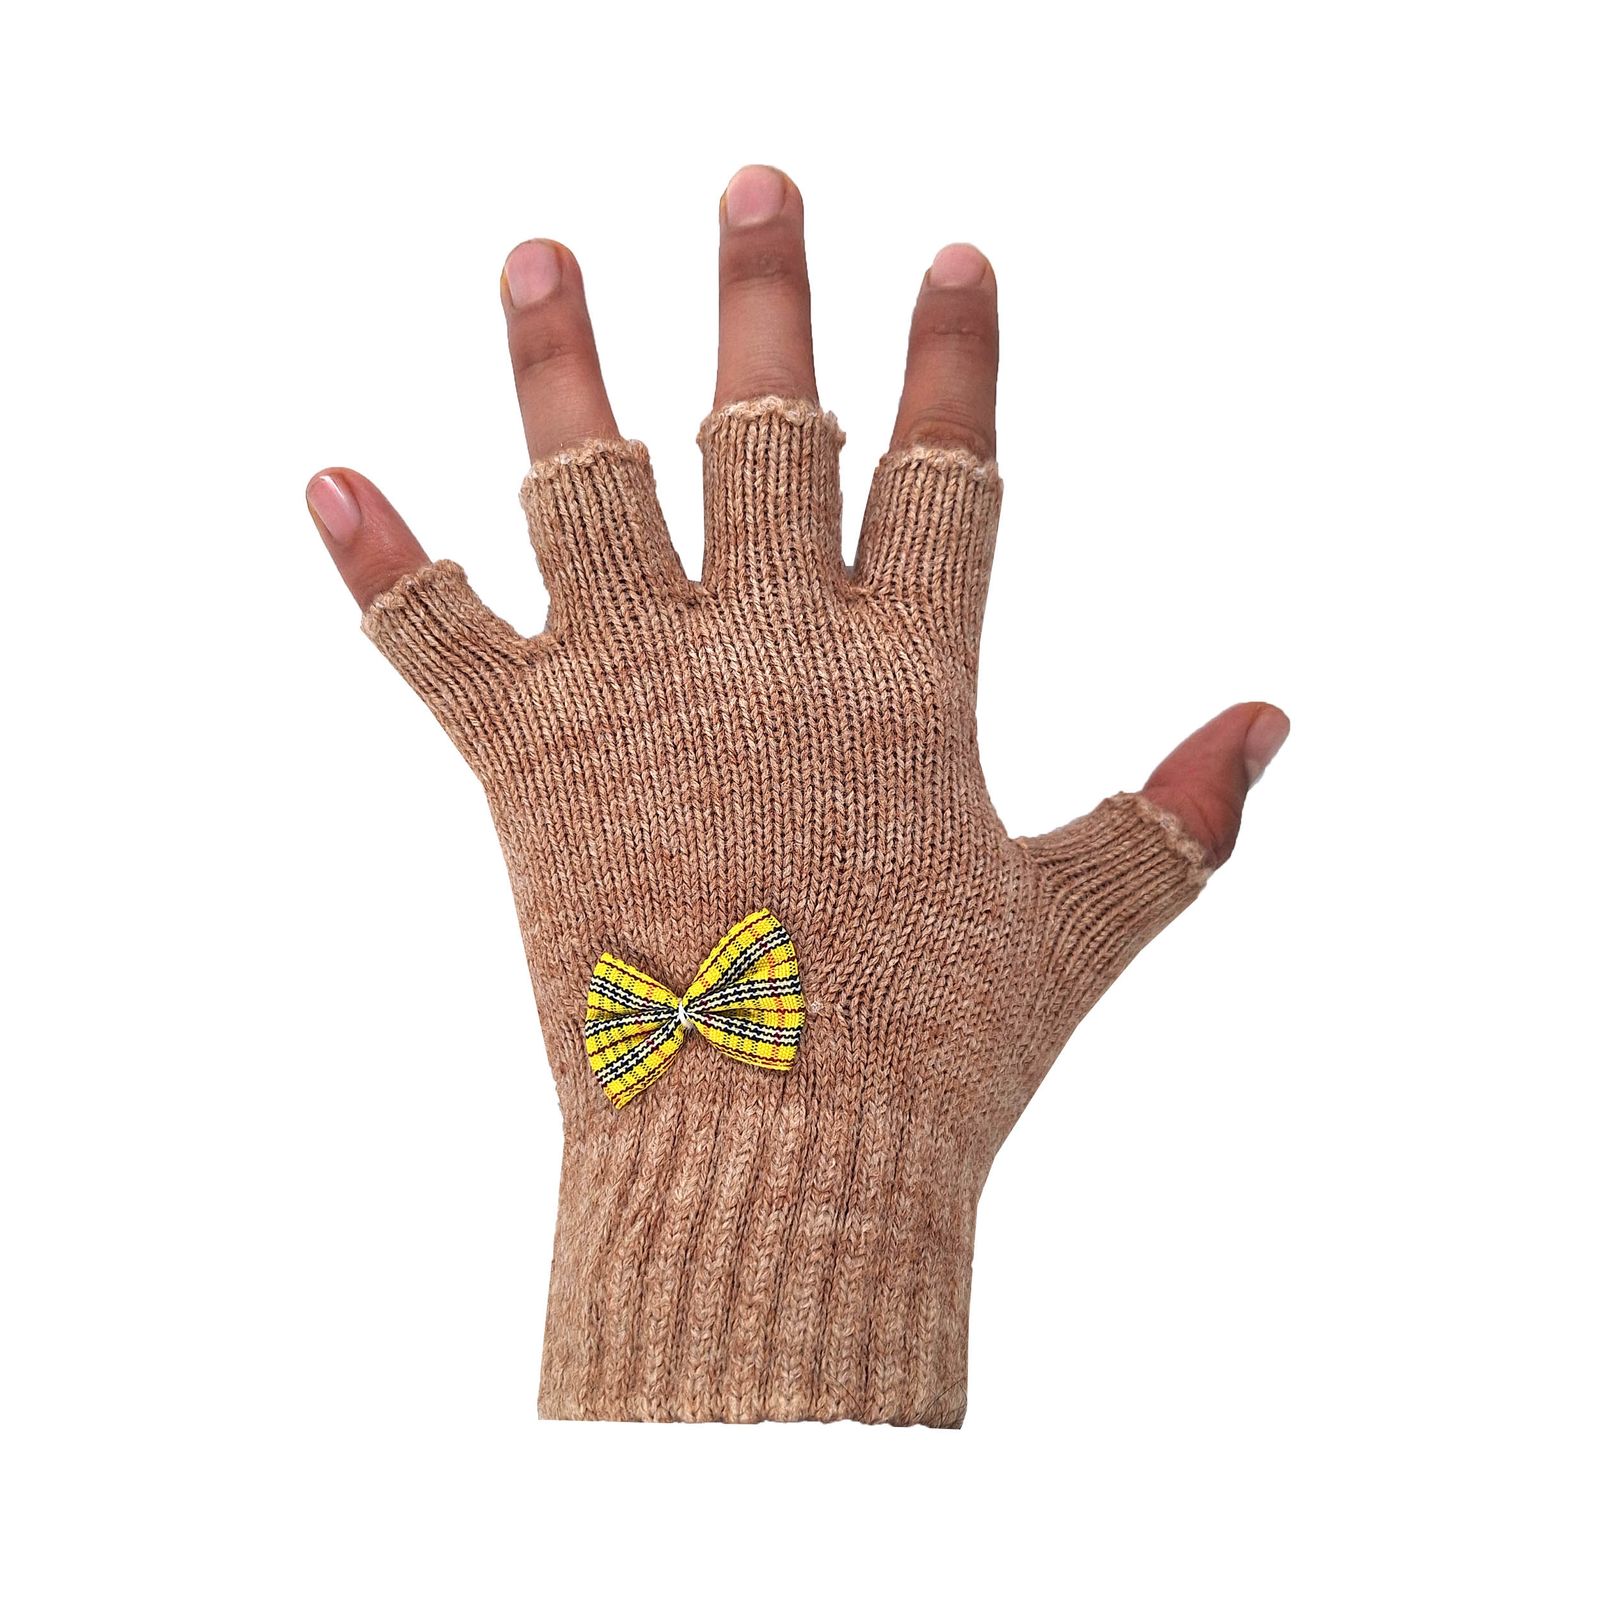 دستکش بافتنی دخترانه نیم انگشتی طرح پاپیون کد 1094 -  - 9